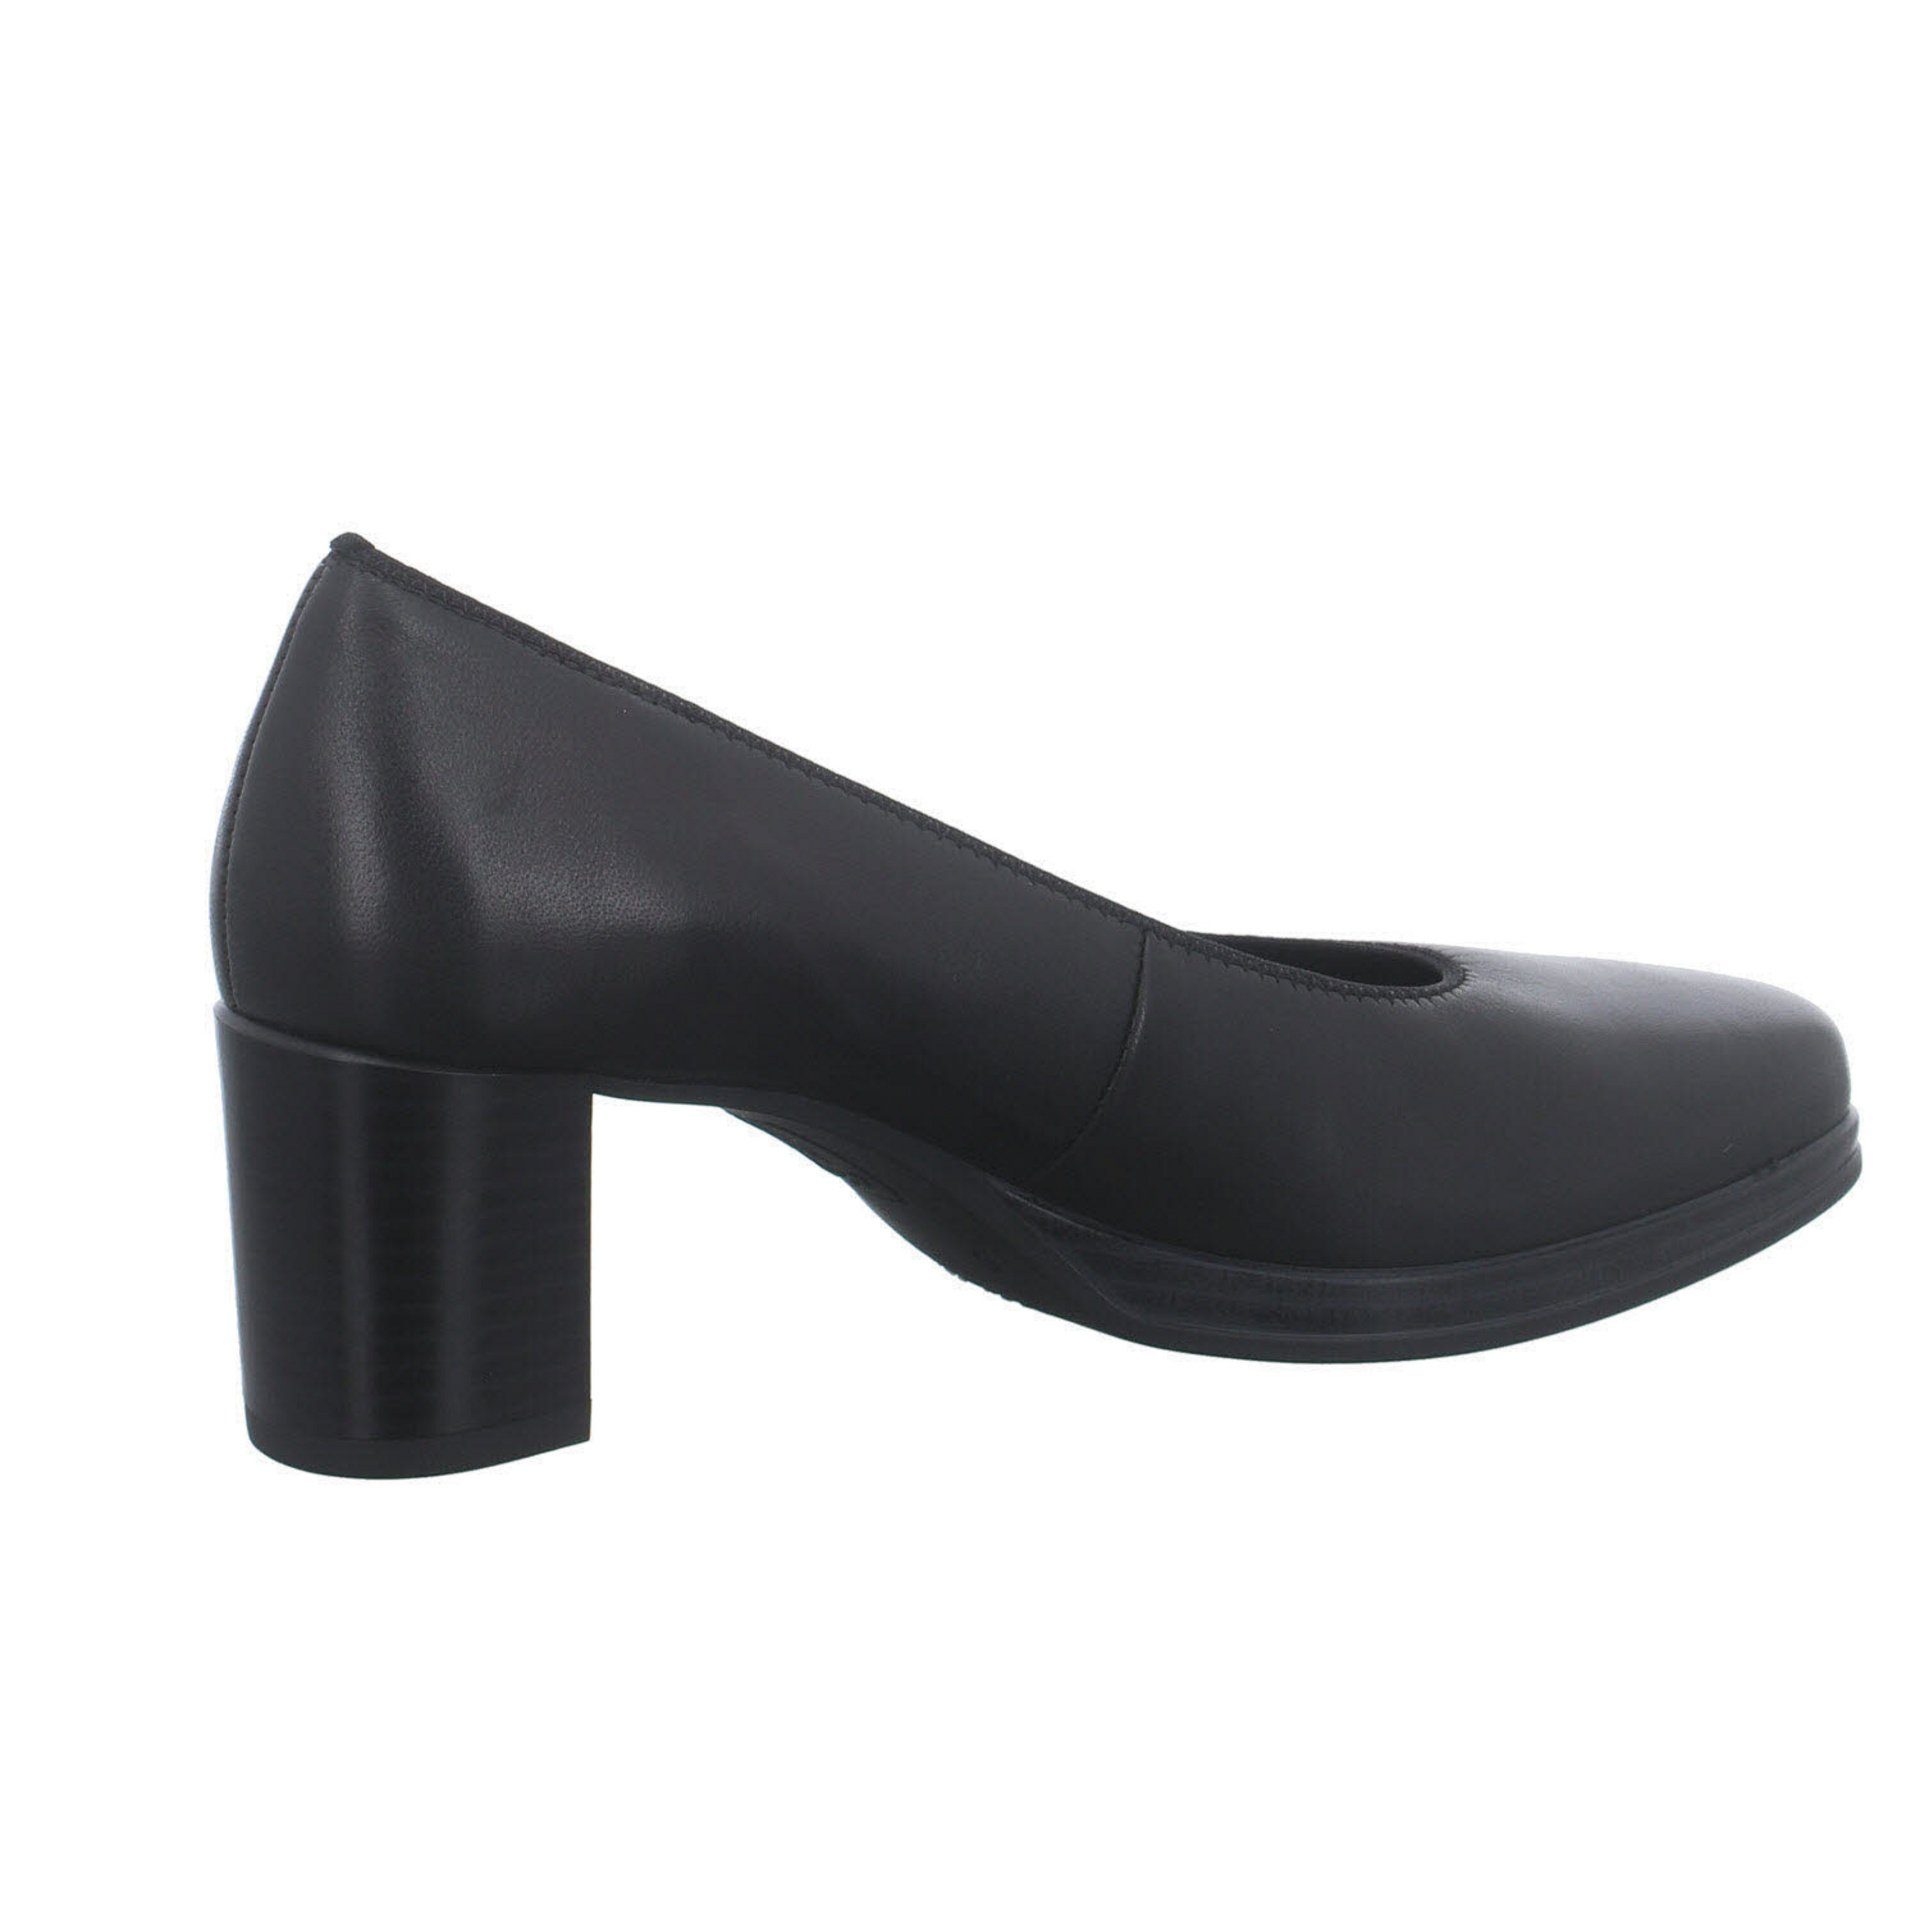 schwarz Klassisch Schuhe 043701 Elegant Cannes Pumps Pumps Pumps Damen Ara Glattleder